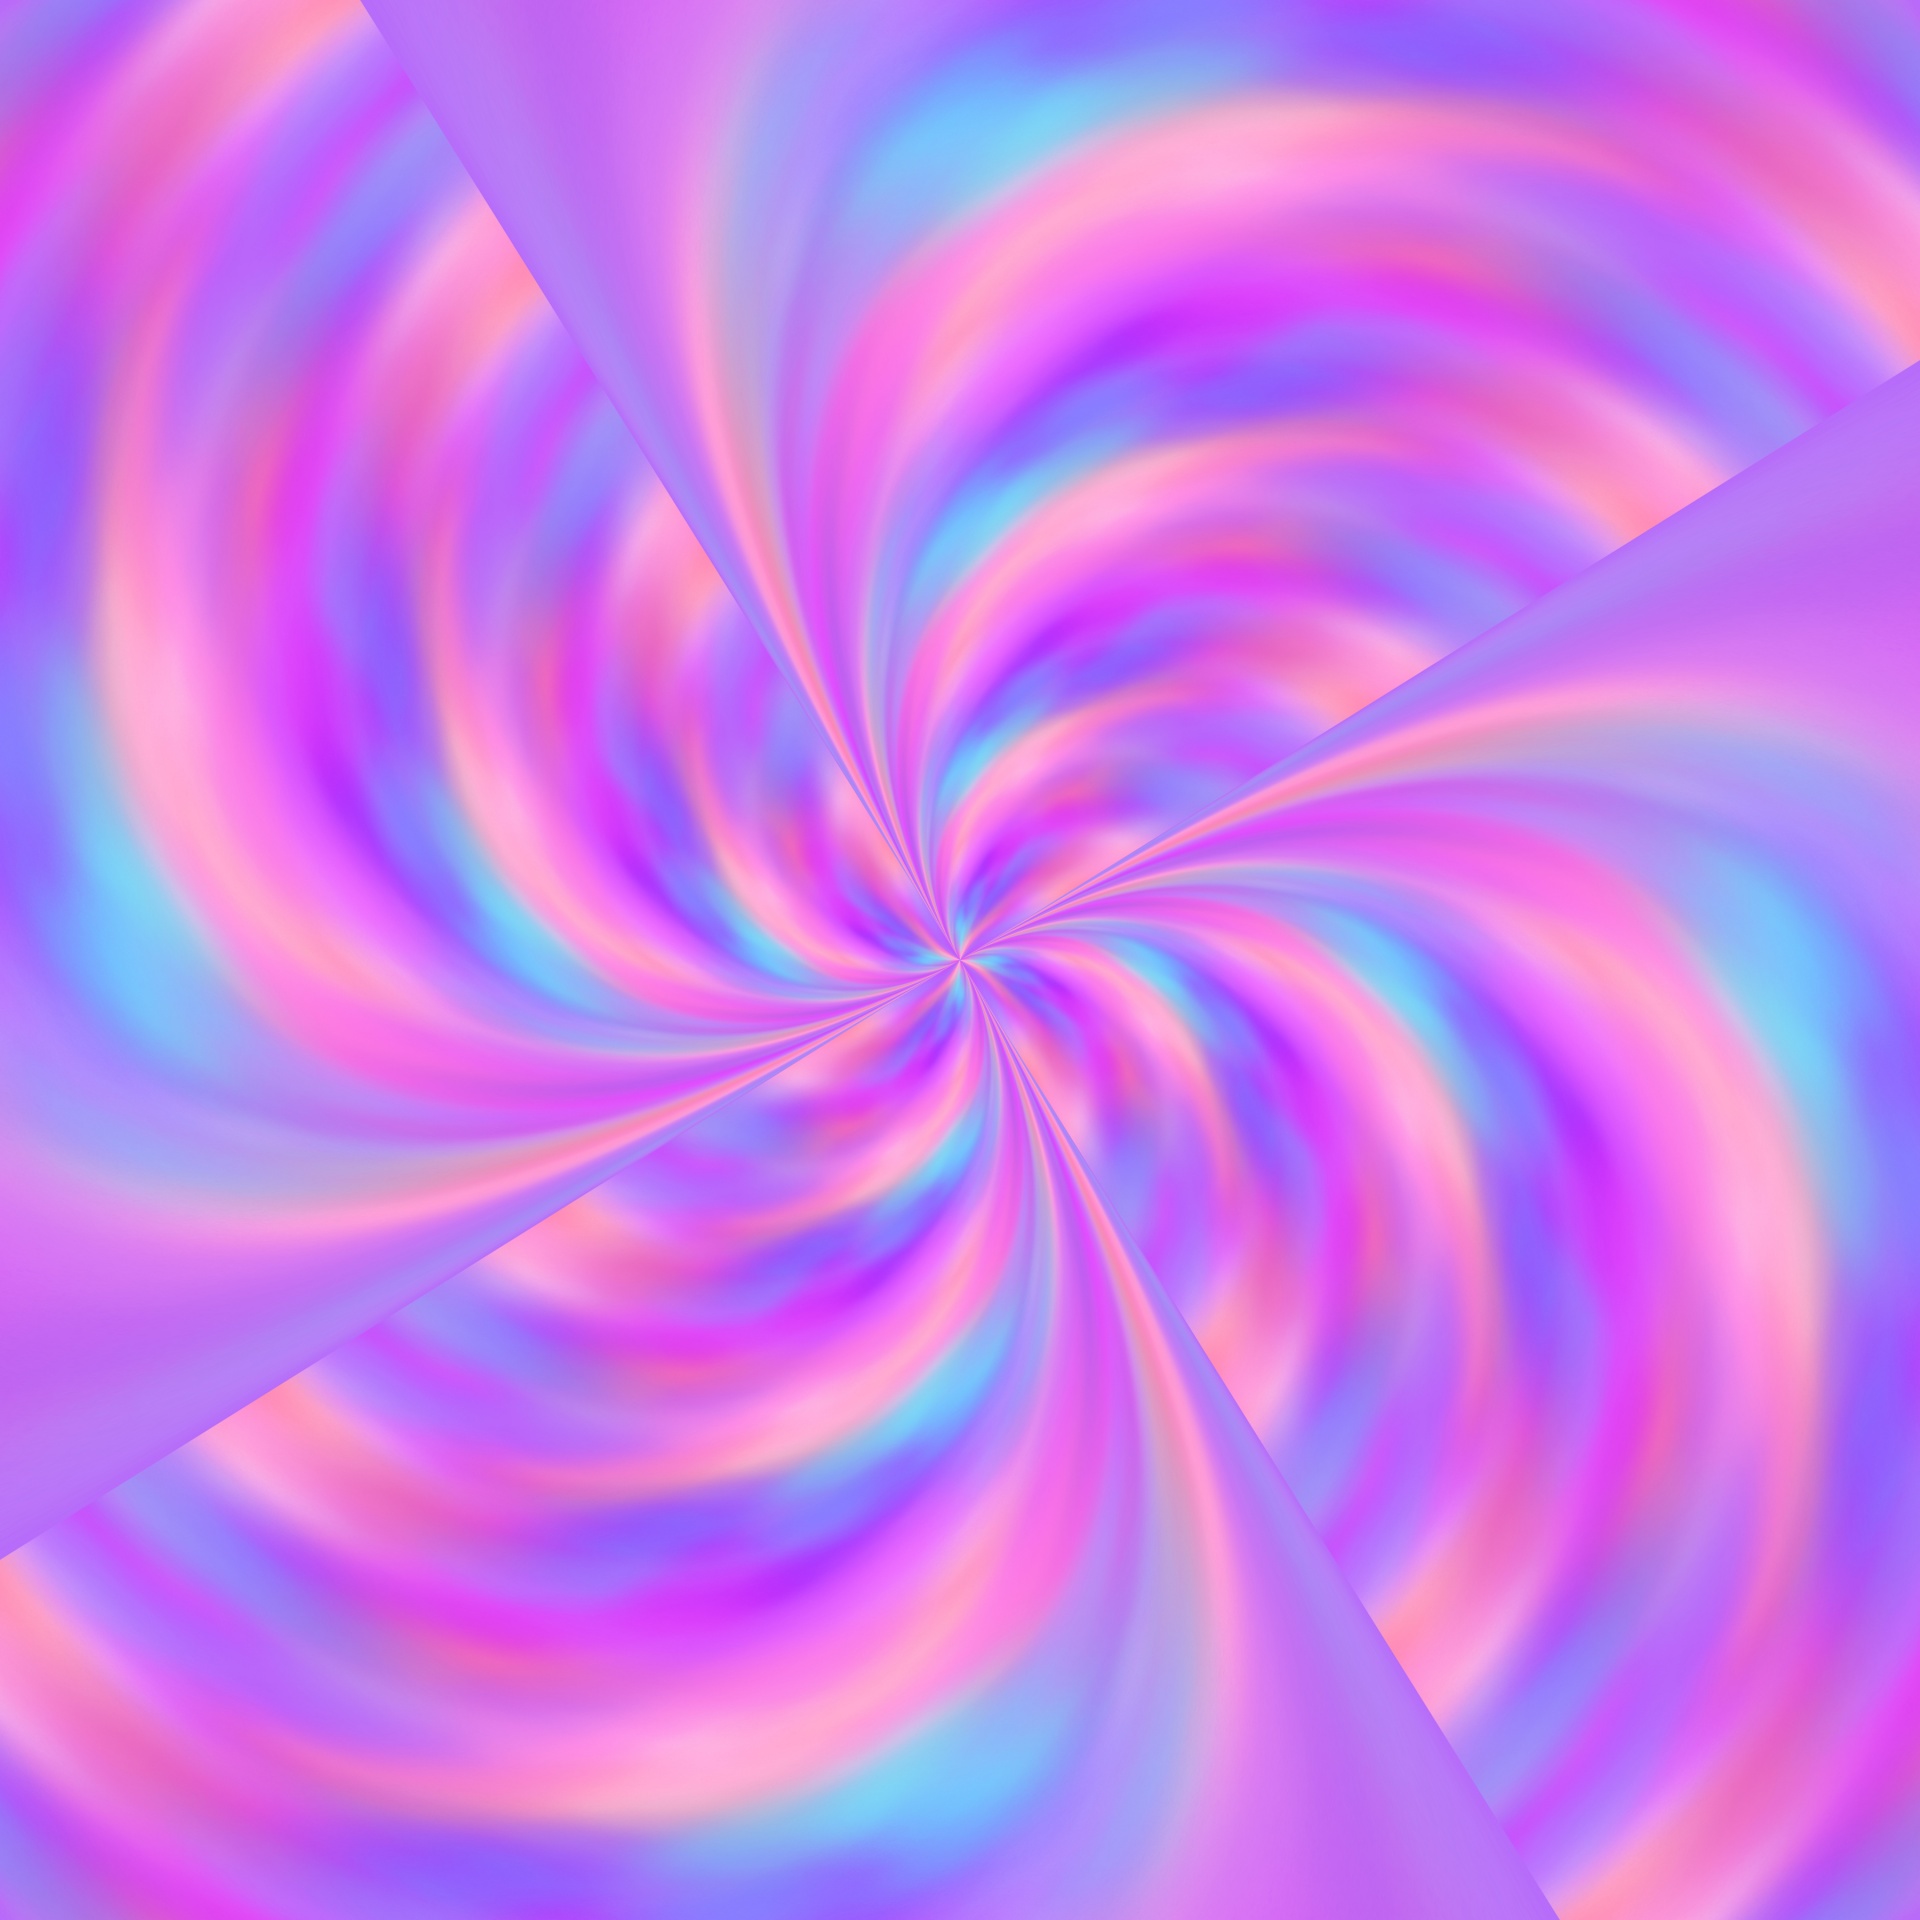 Background design with swirl patterns in fuchsia, orange and blue gradient